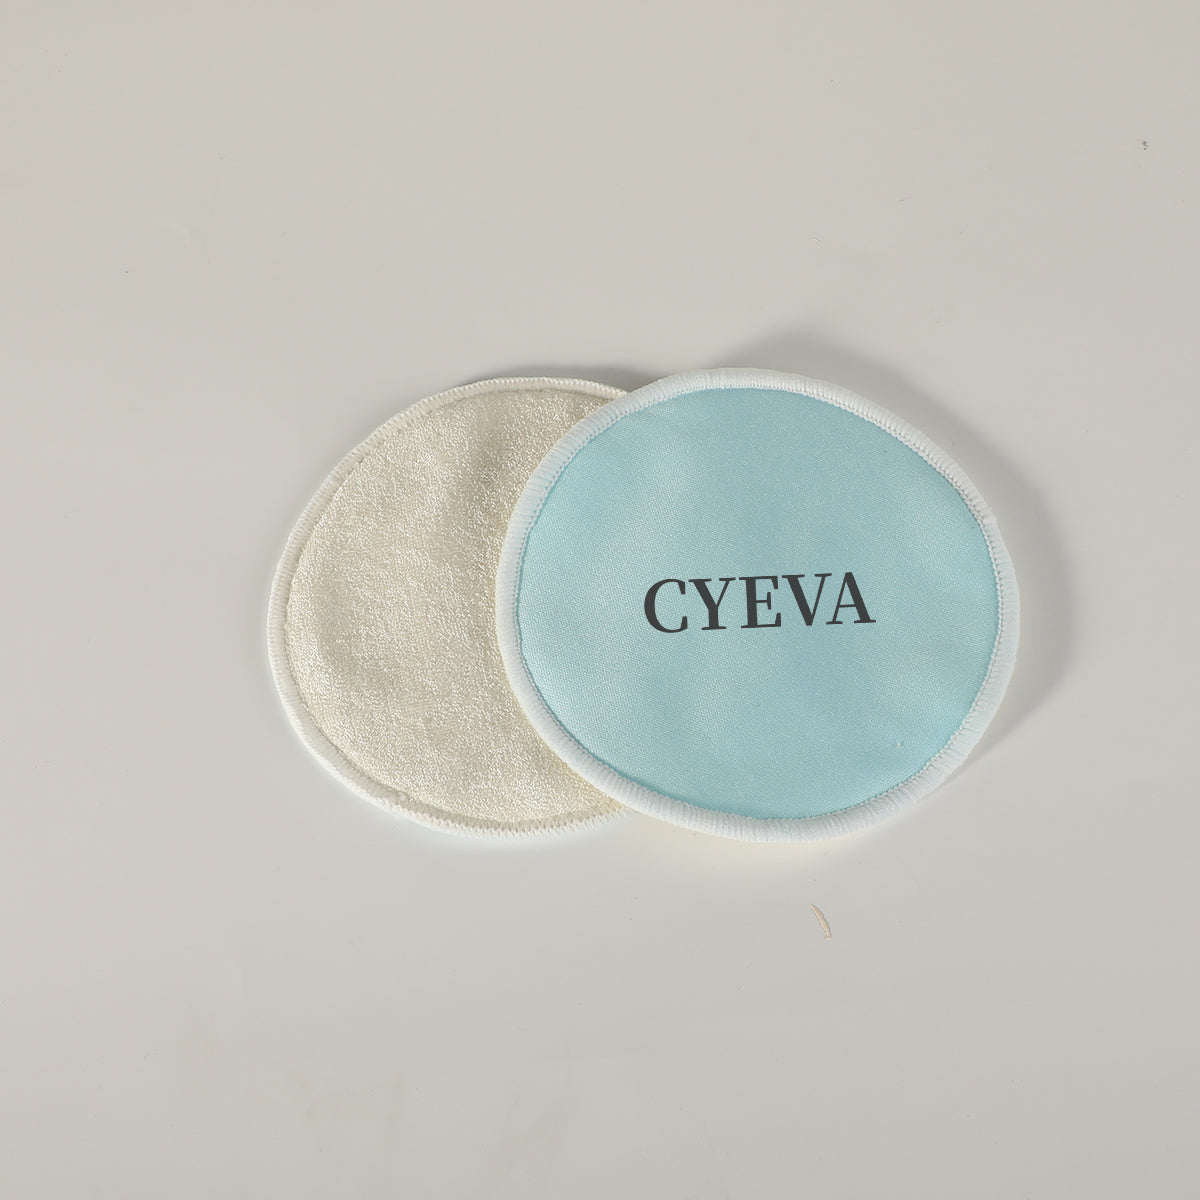 CYEVA Breast-nursing pads, Disposable Breast Pads for Breastfeeding